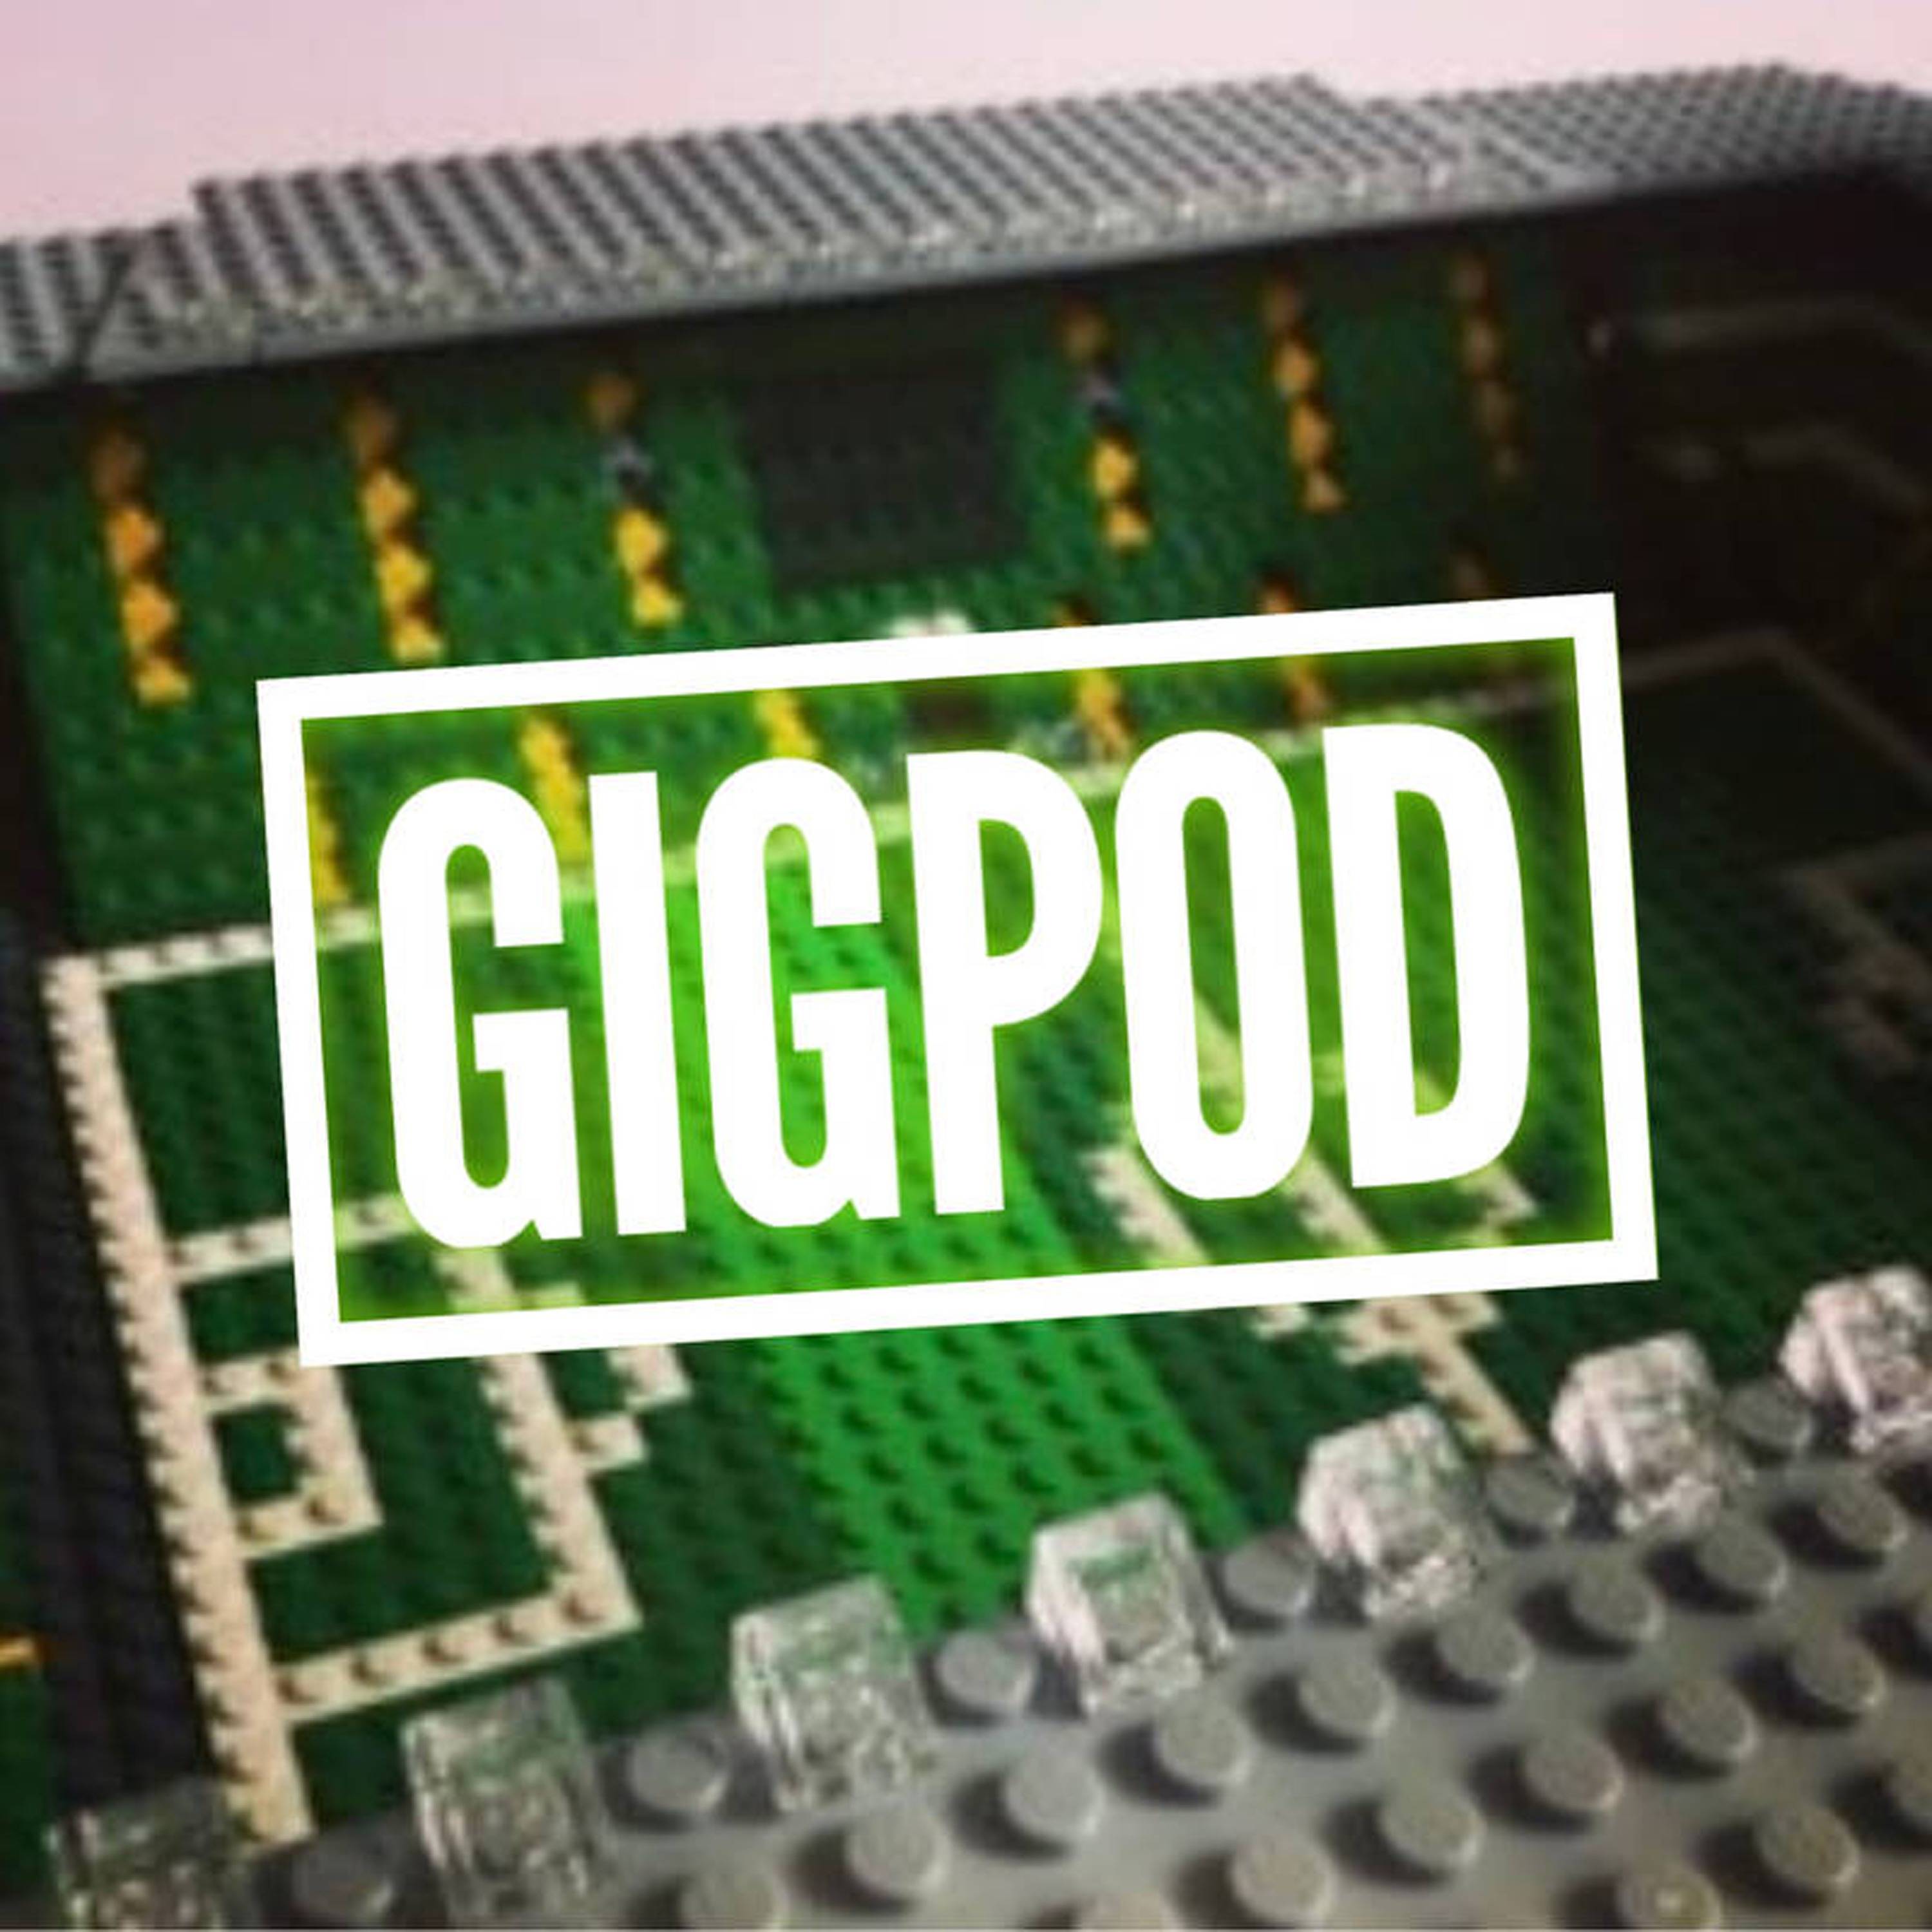 Gigpod Ep 189: a Sore One to Take